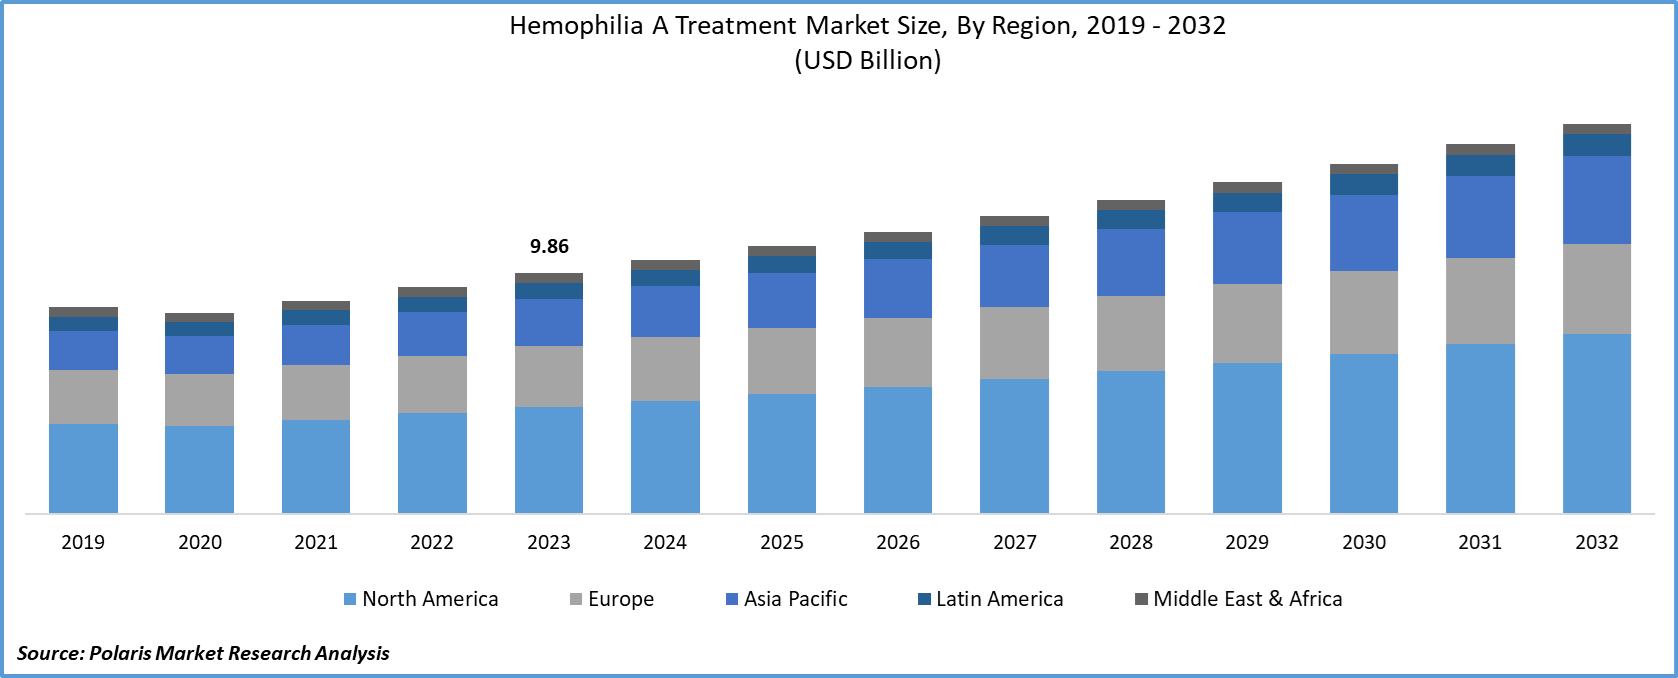 Hemophilia A Treatment Market Size